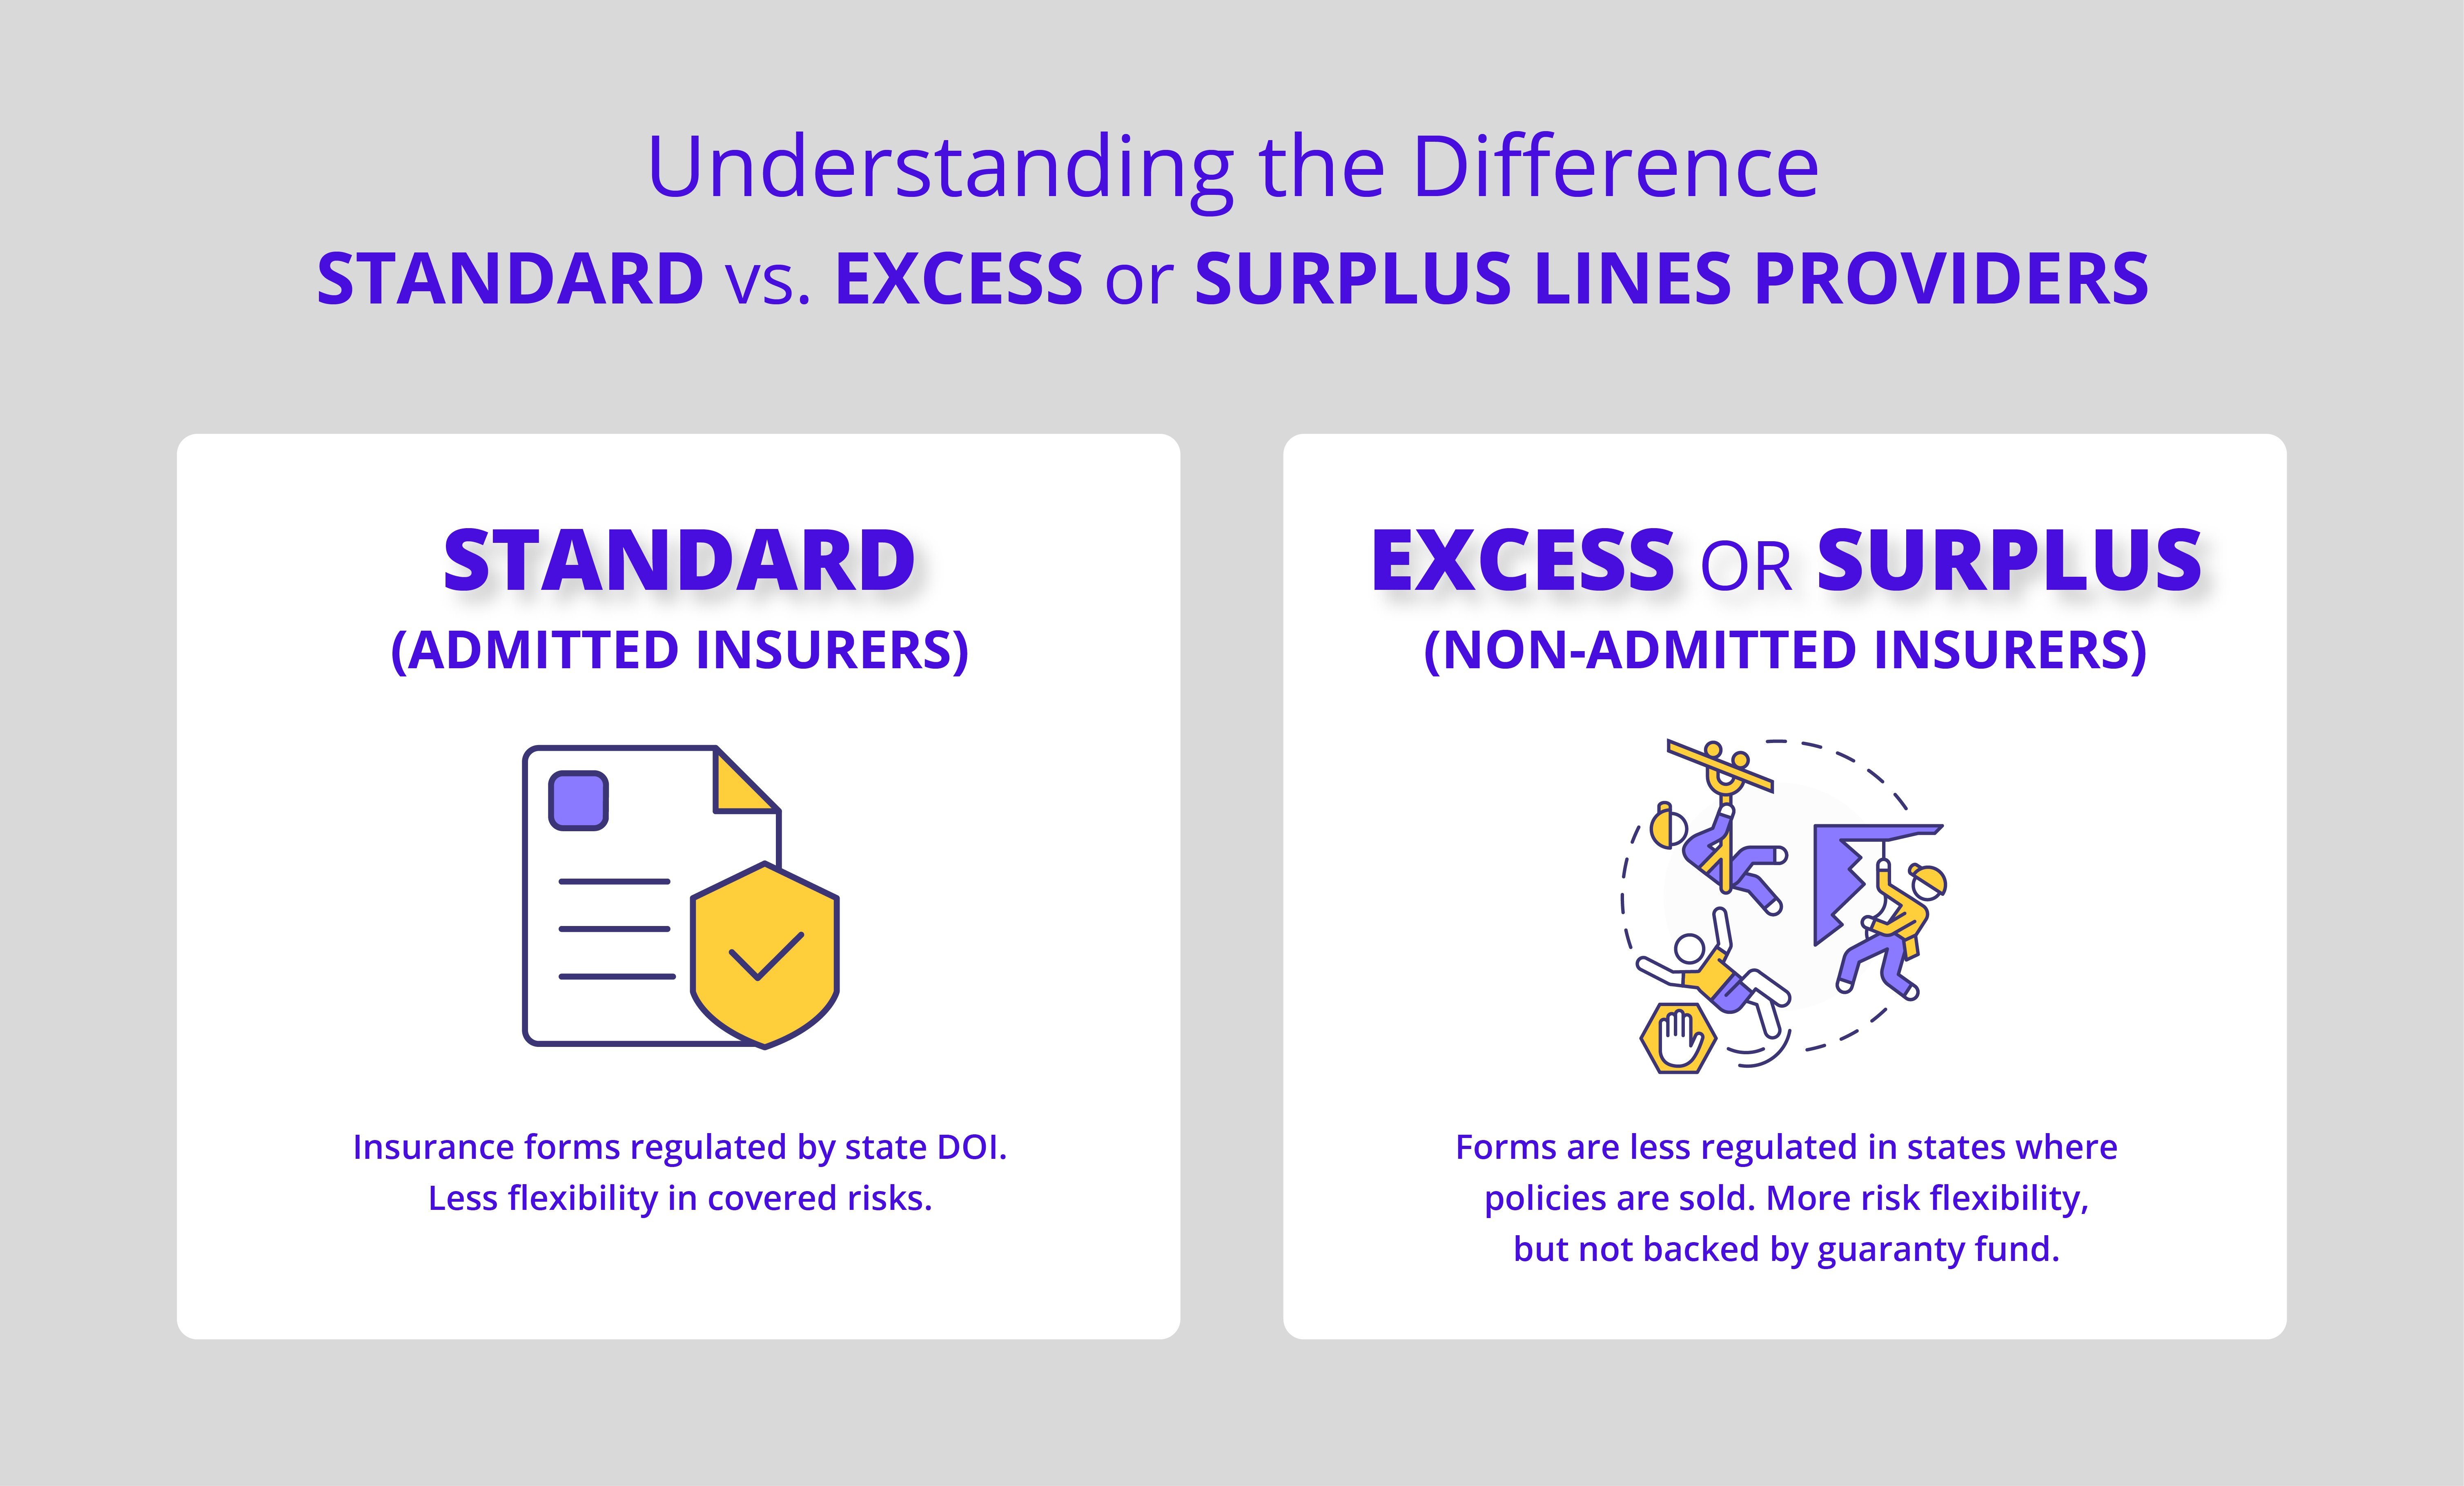 Standard vs. excess or surplus lines providers.